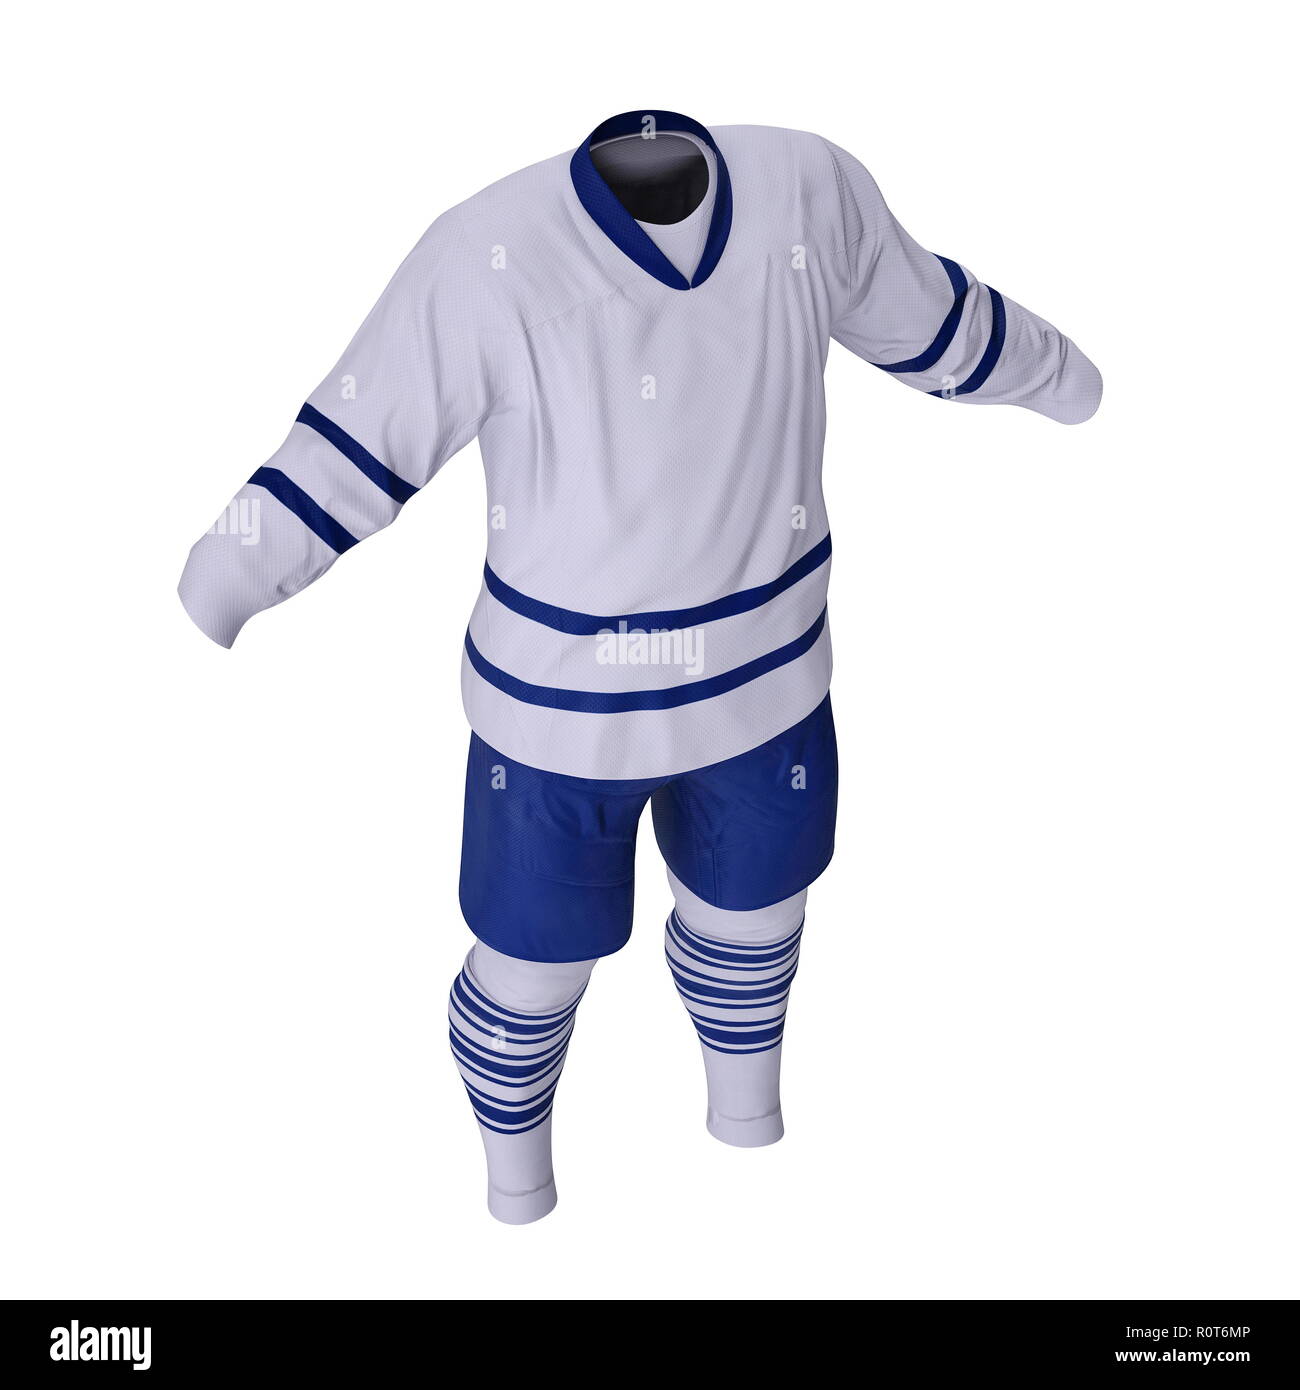 Hockey T Shirt Design Images – Browse 6,286 Stock Photos, Vectors